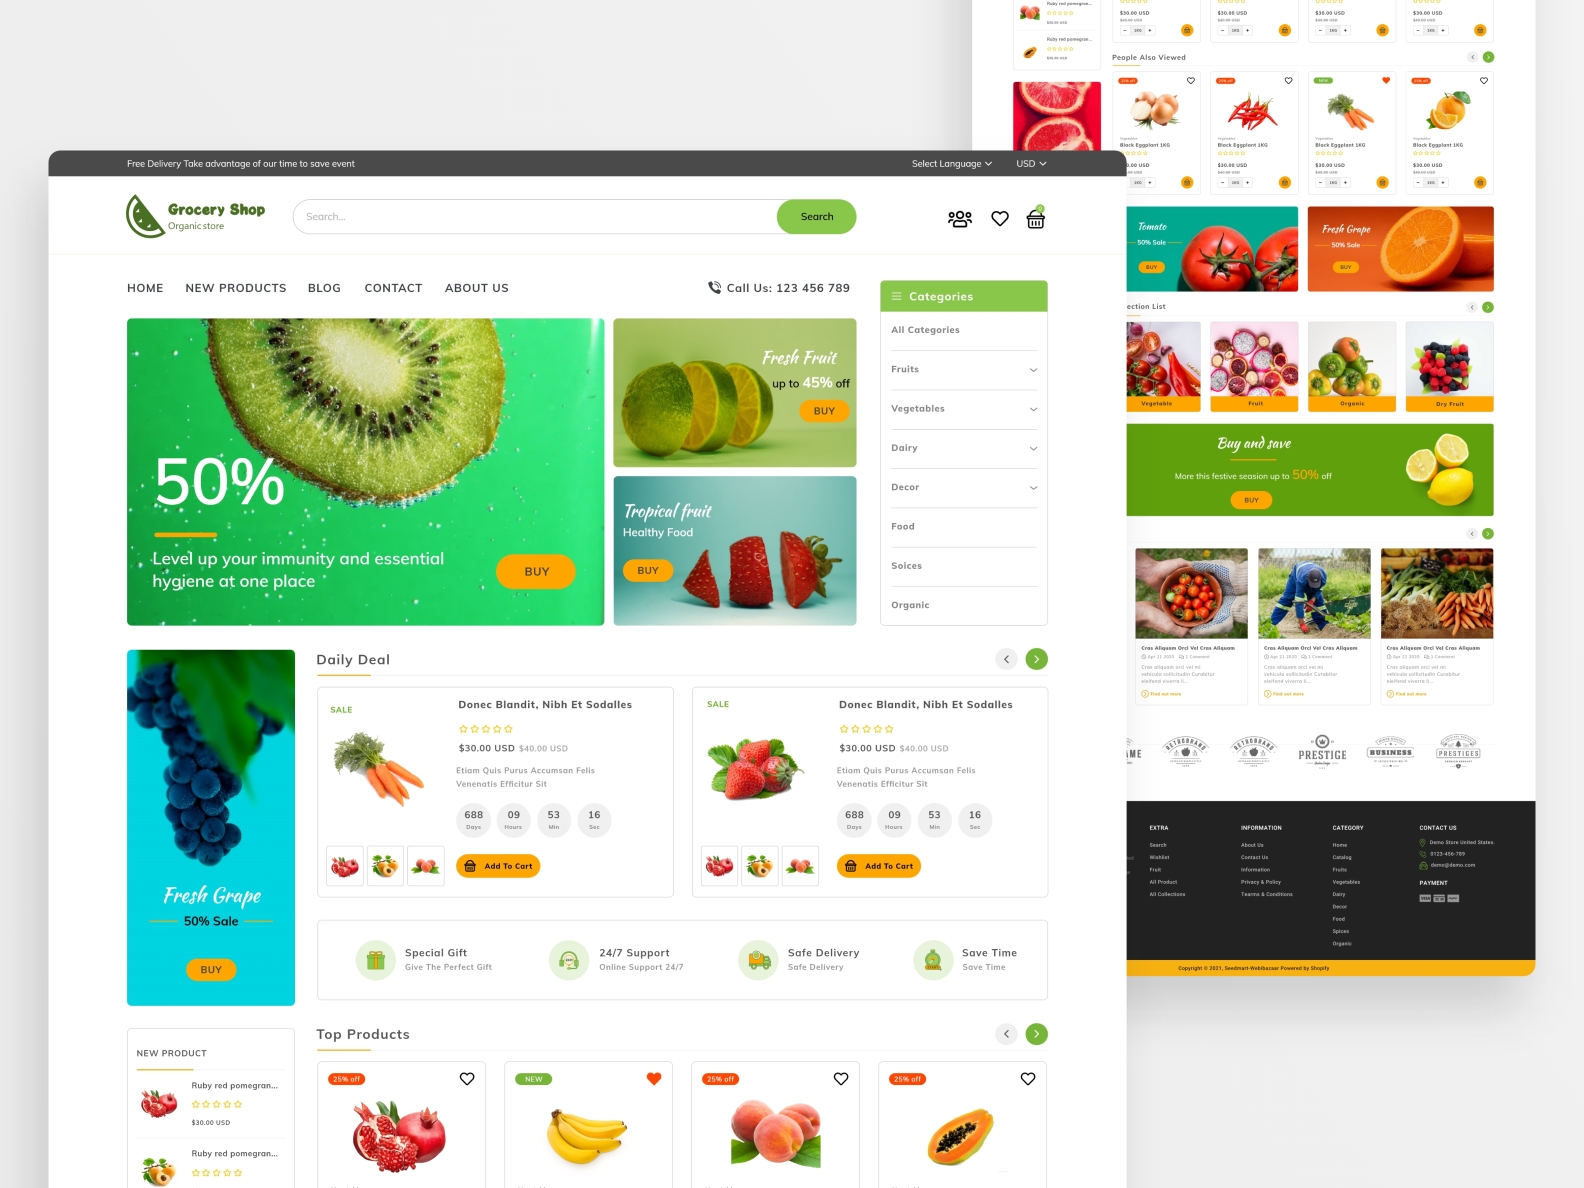 Grocery Shop Landing Page by Alireza Hashemi - UI/UX Designer on Dribbble